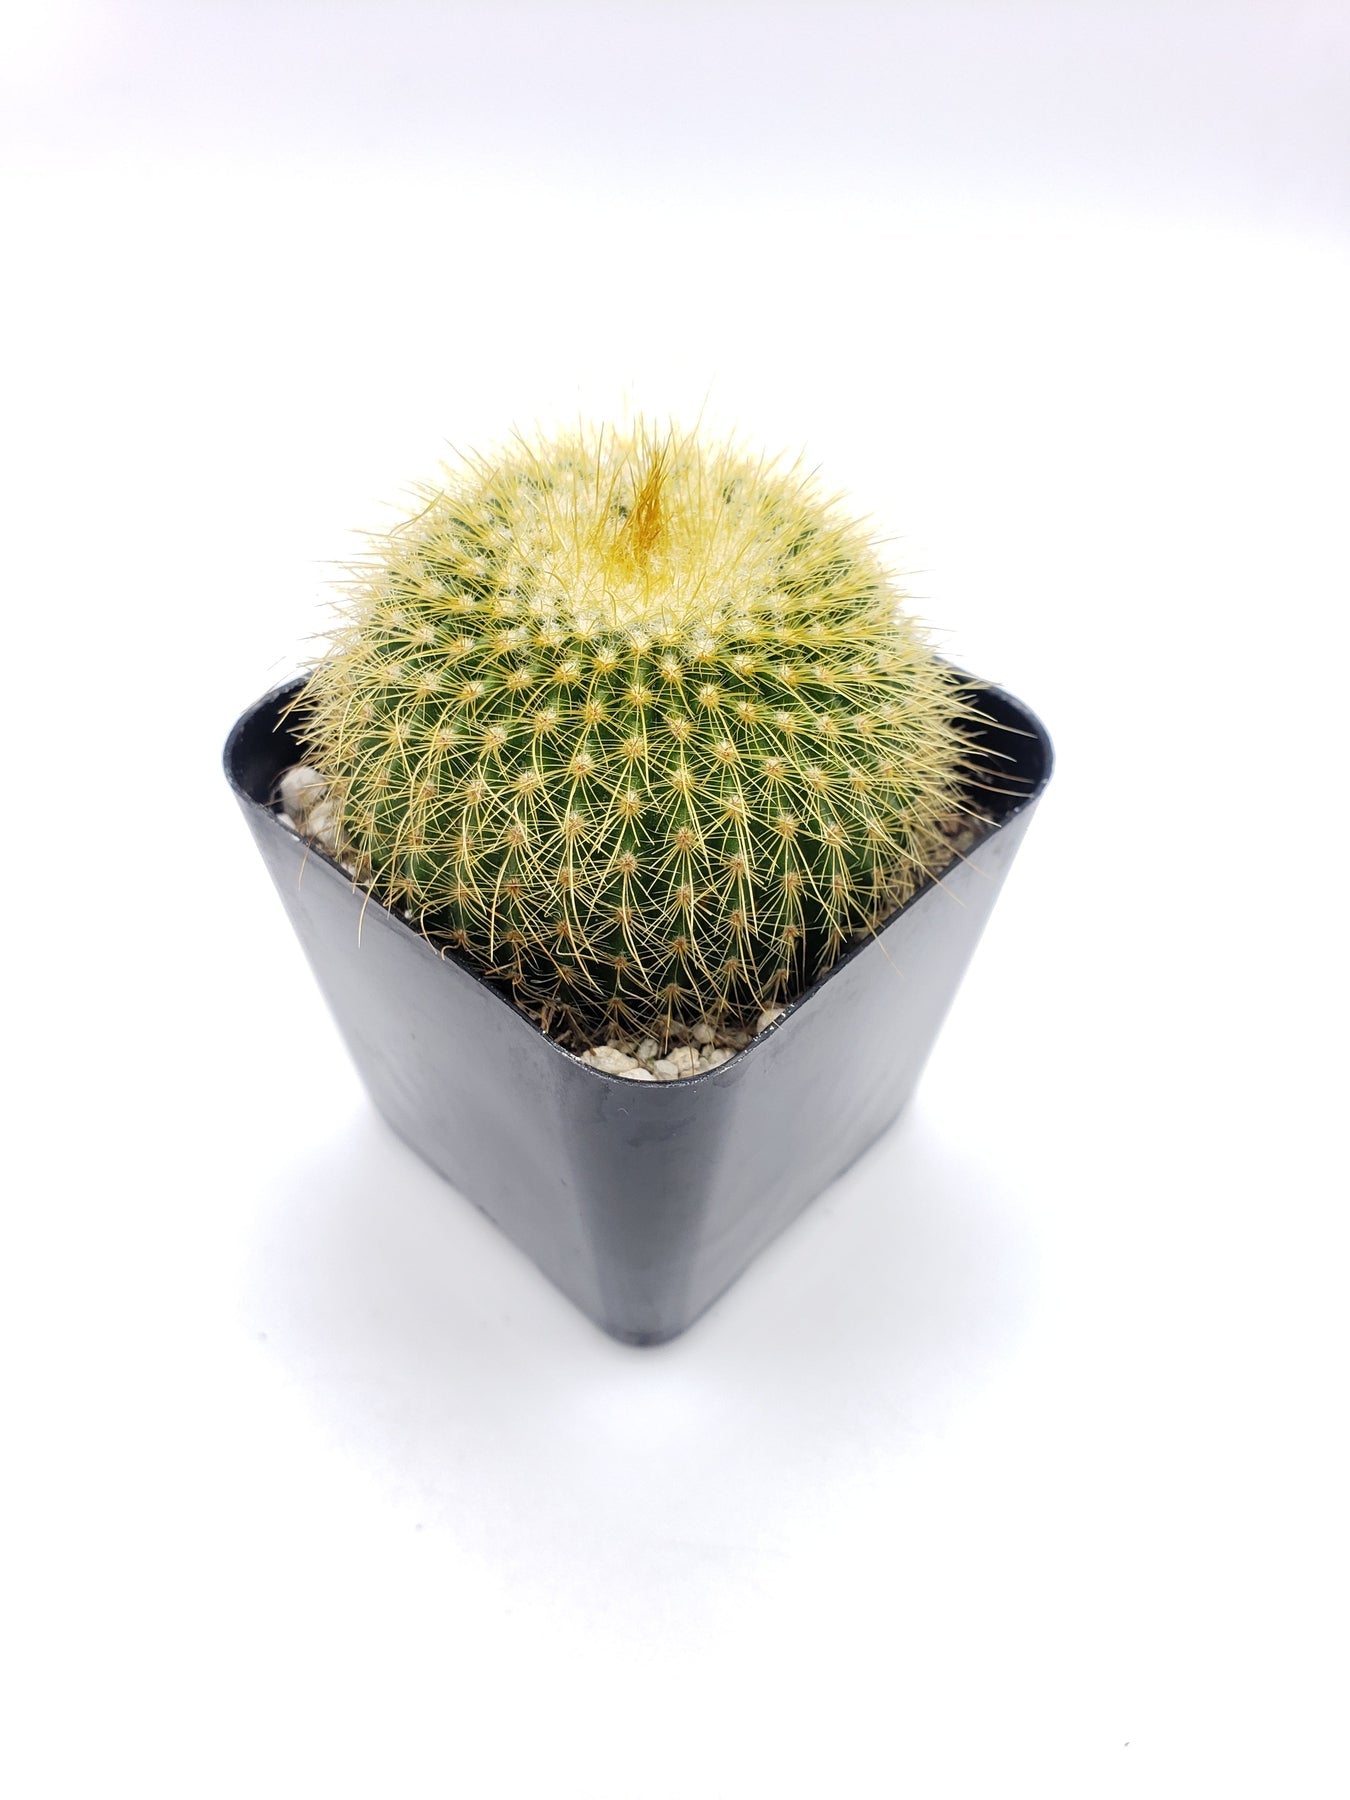 #11C Parodia Leninghausii Golden Ball 2"-Cactus - Small - Exact Type-The Succulent Source